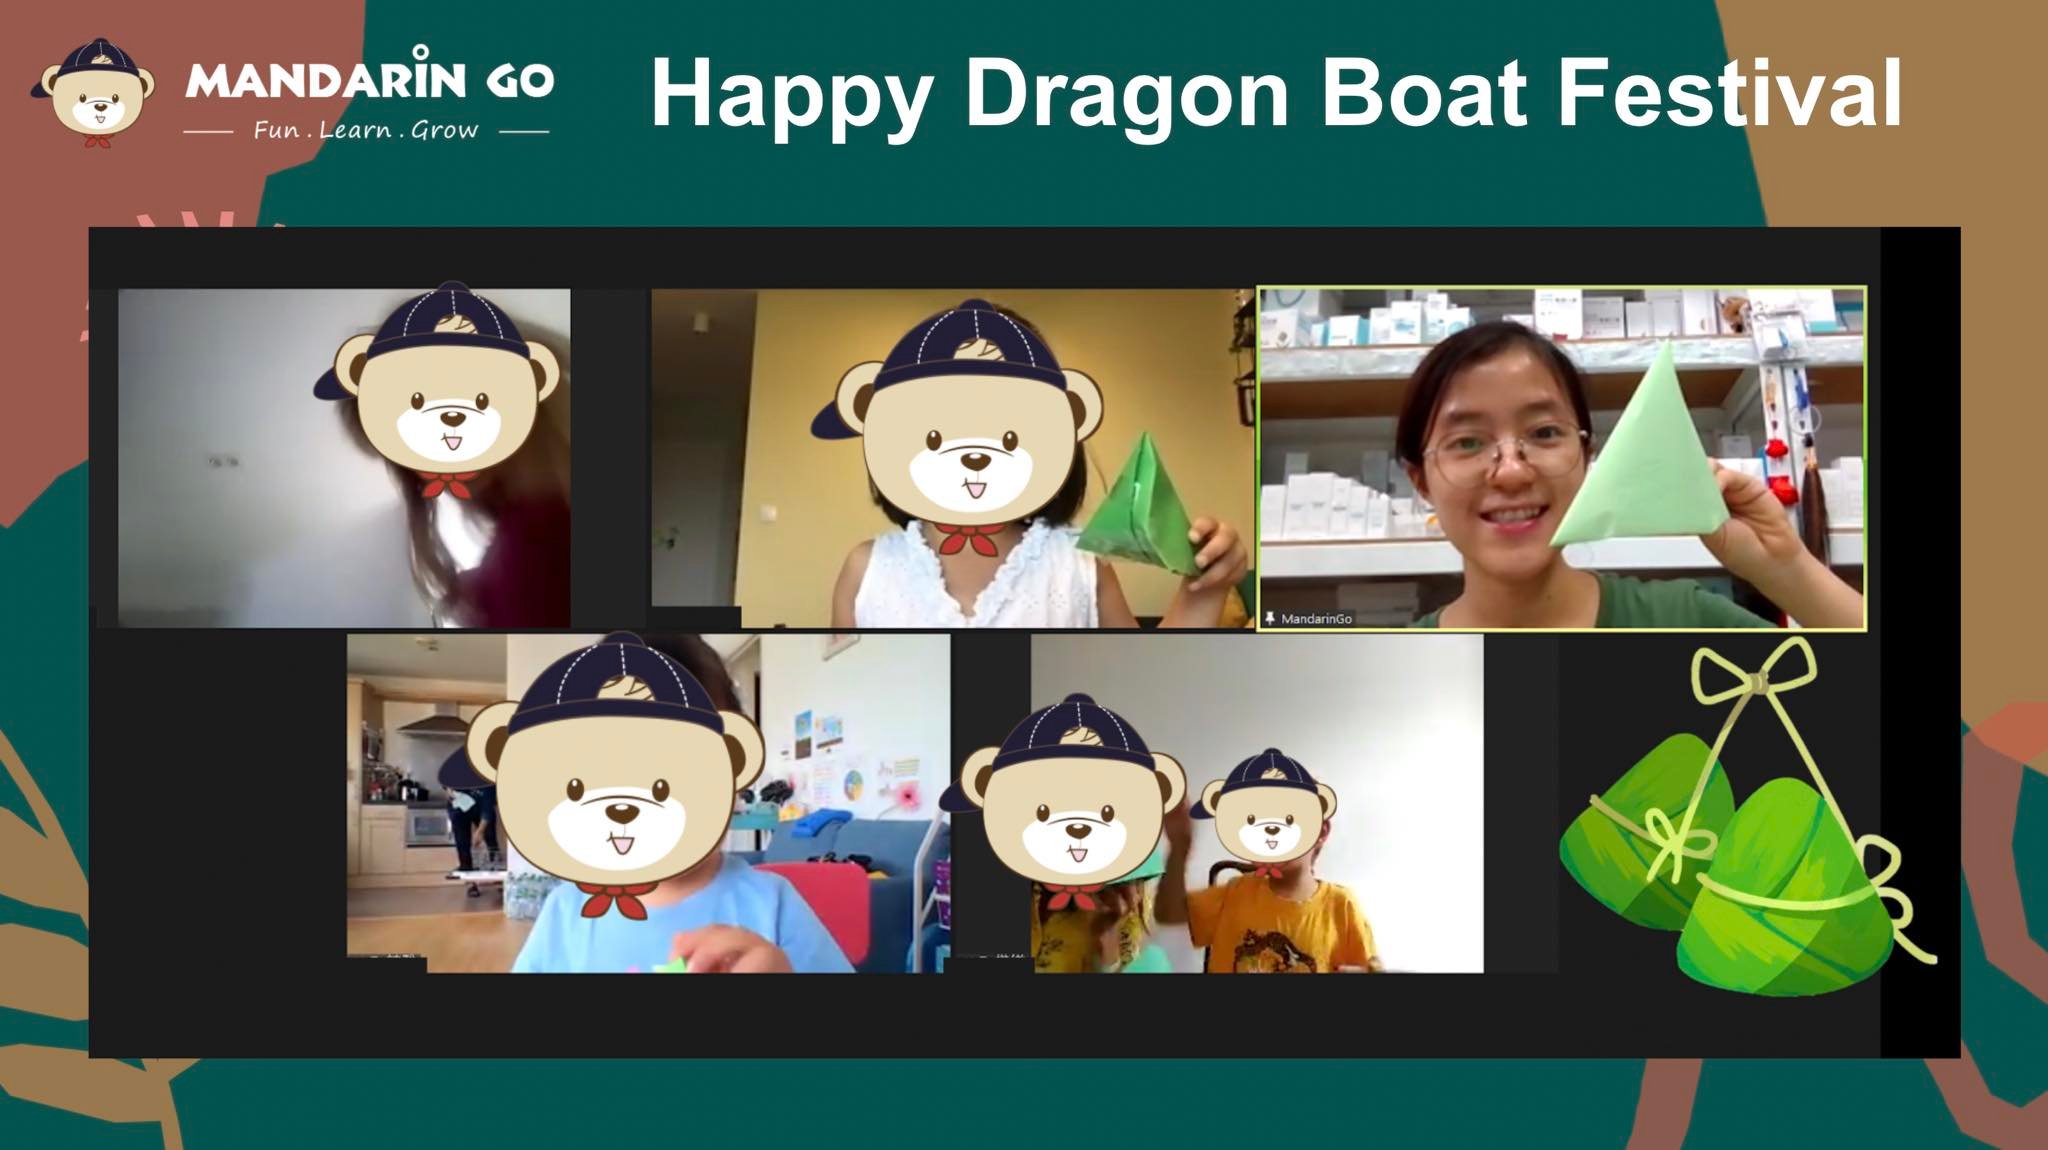 Mandarin Go 端午節粽子製作，每顆小粽子都好可愛唷！祝福大家端午節快樂 Happy Dragon Boat Festival！